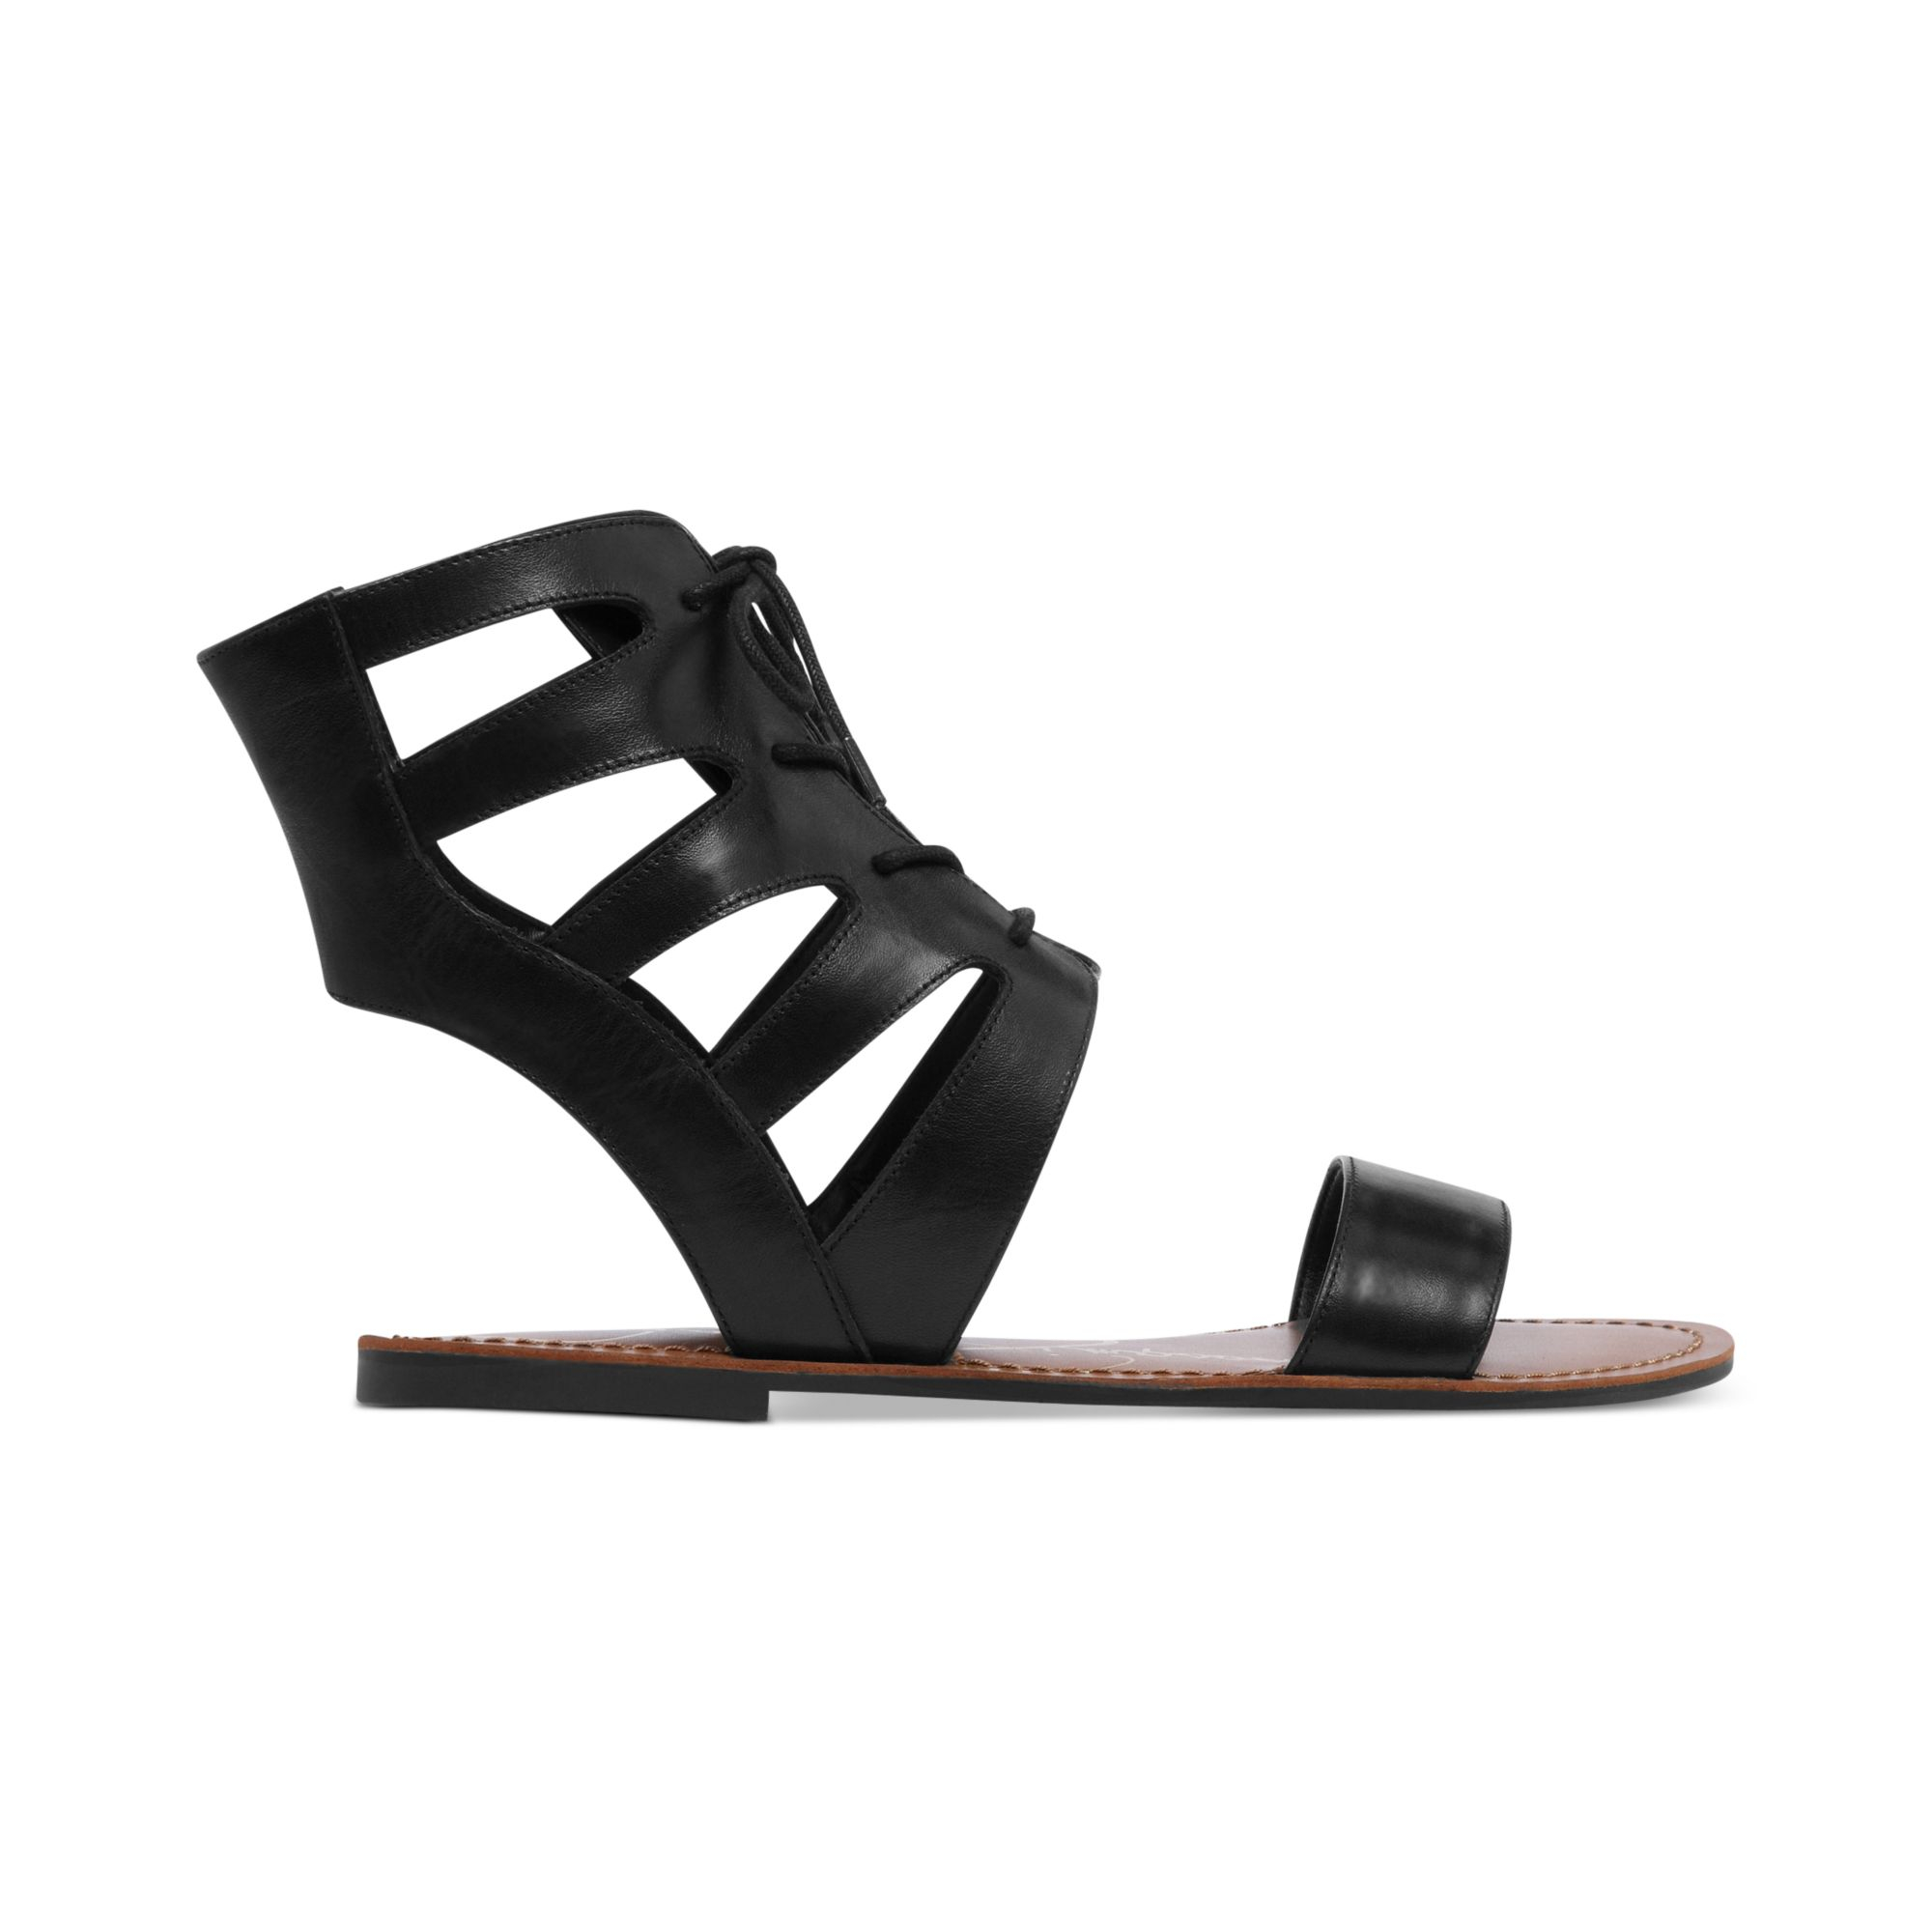 Lyst - Jessica Simpson Karrdeez Gladiator Flat Sandals in Black